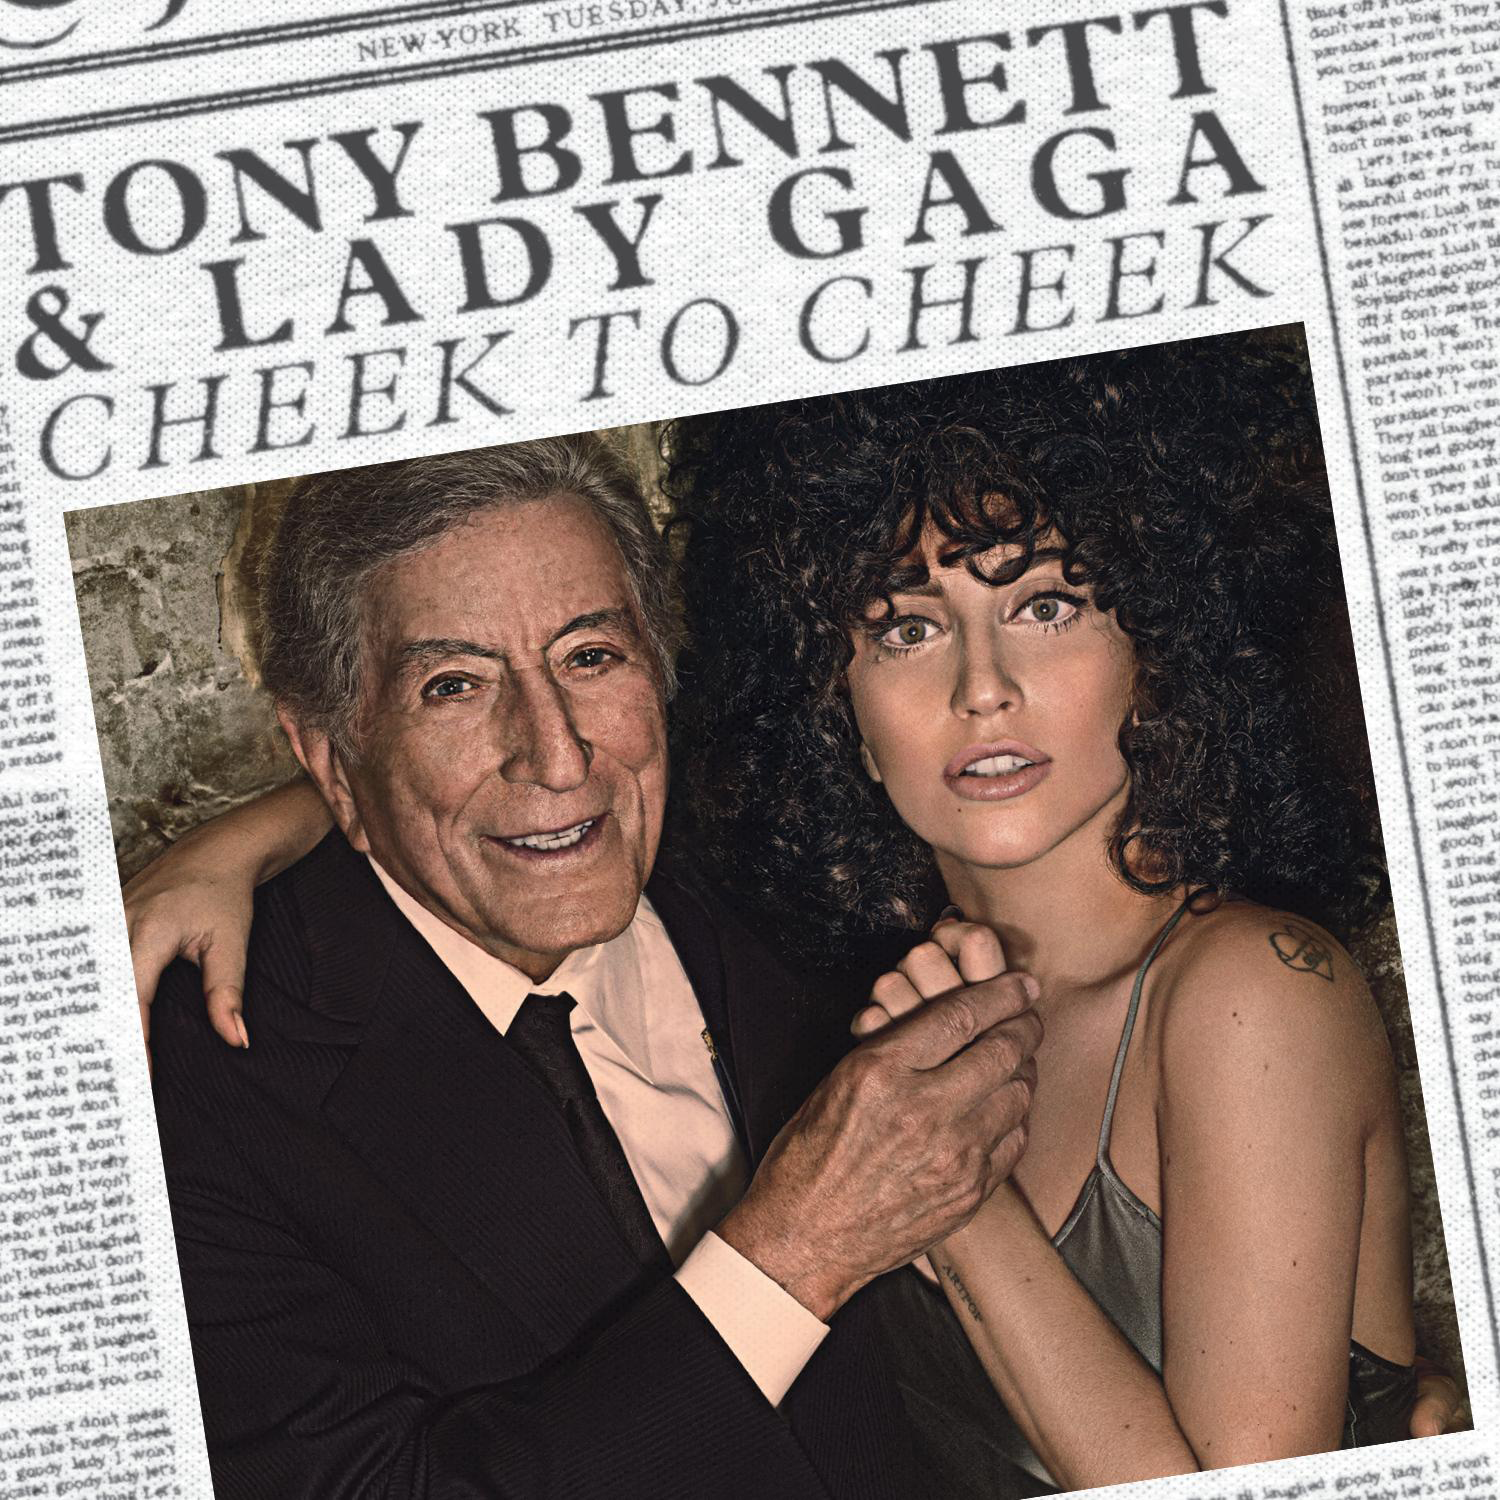 Tonny Bennett & Lady Gaga Score #1 Album Worldwide